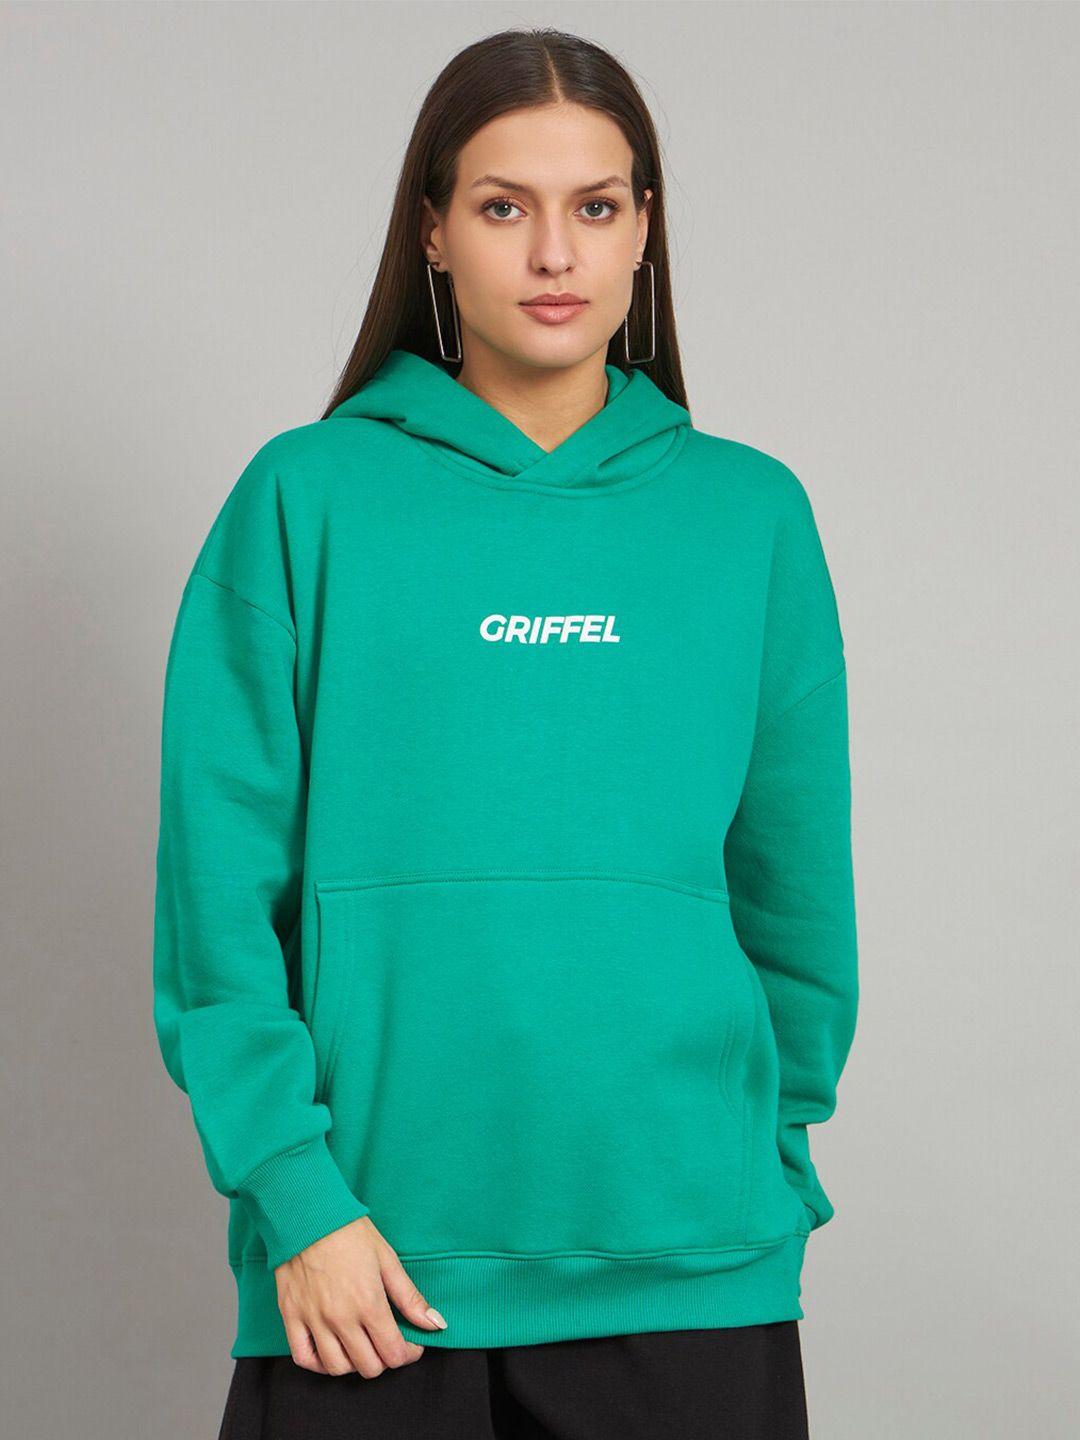 griffel-brand-logo-printed-hooded-fleece-pullover-sweatshirt